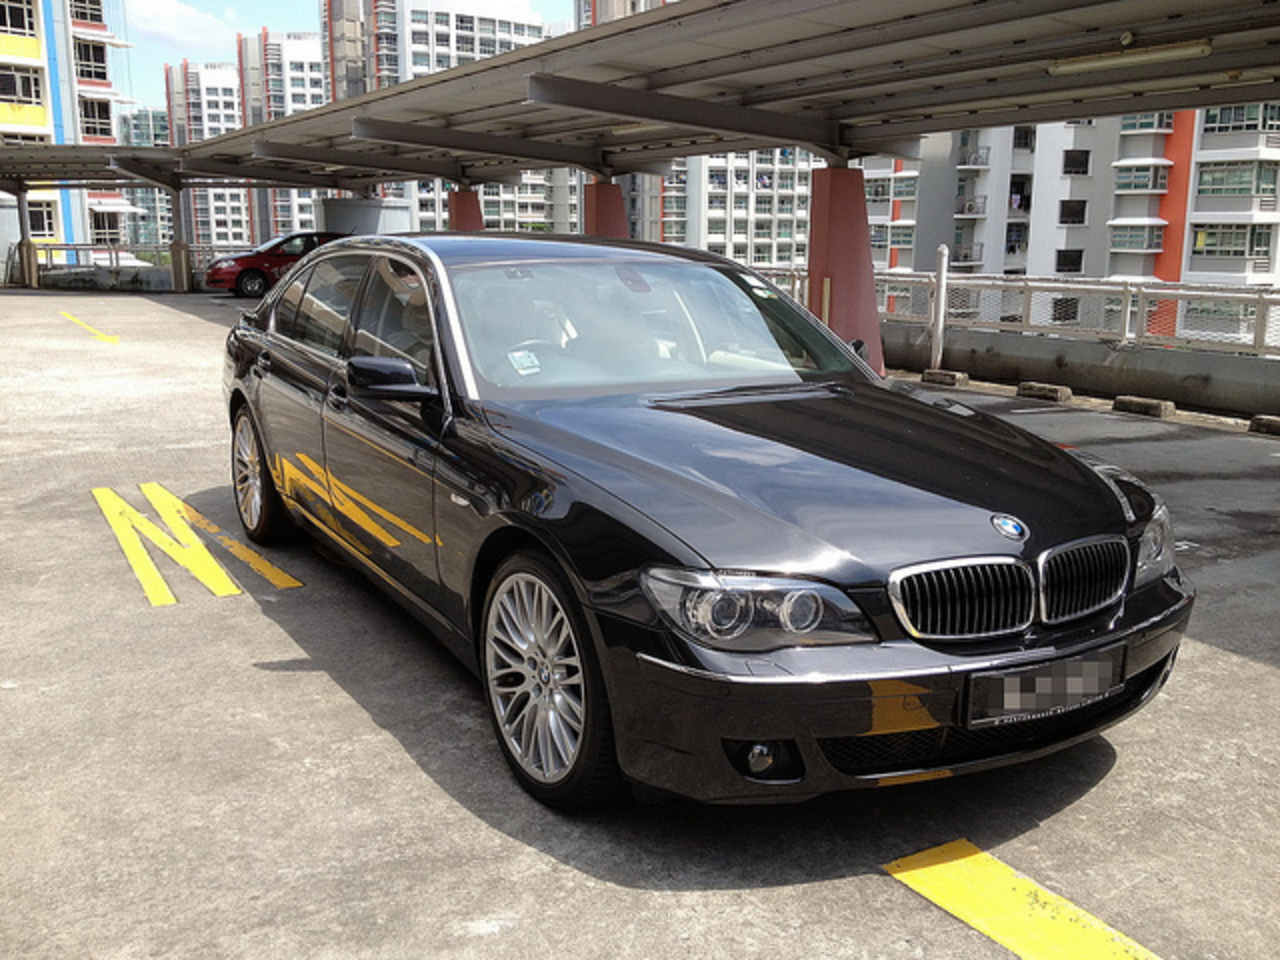 BMW 760Li 01 | Flickr - Photo Sharing!